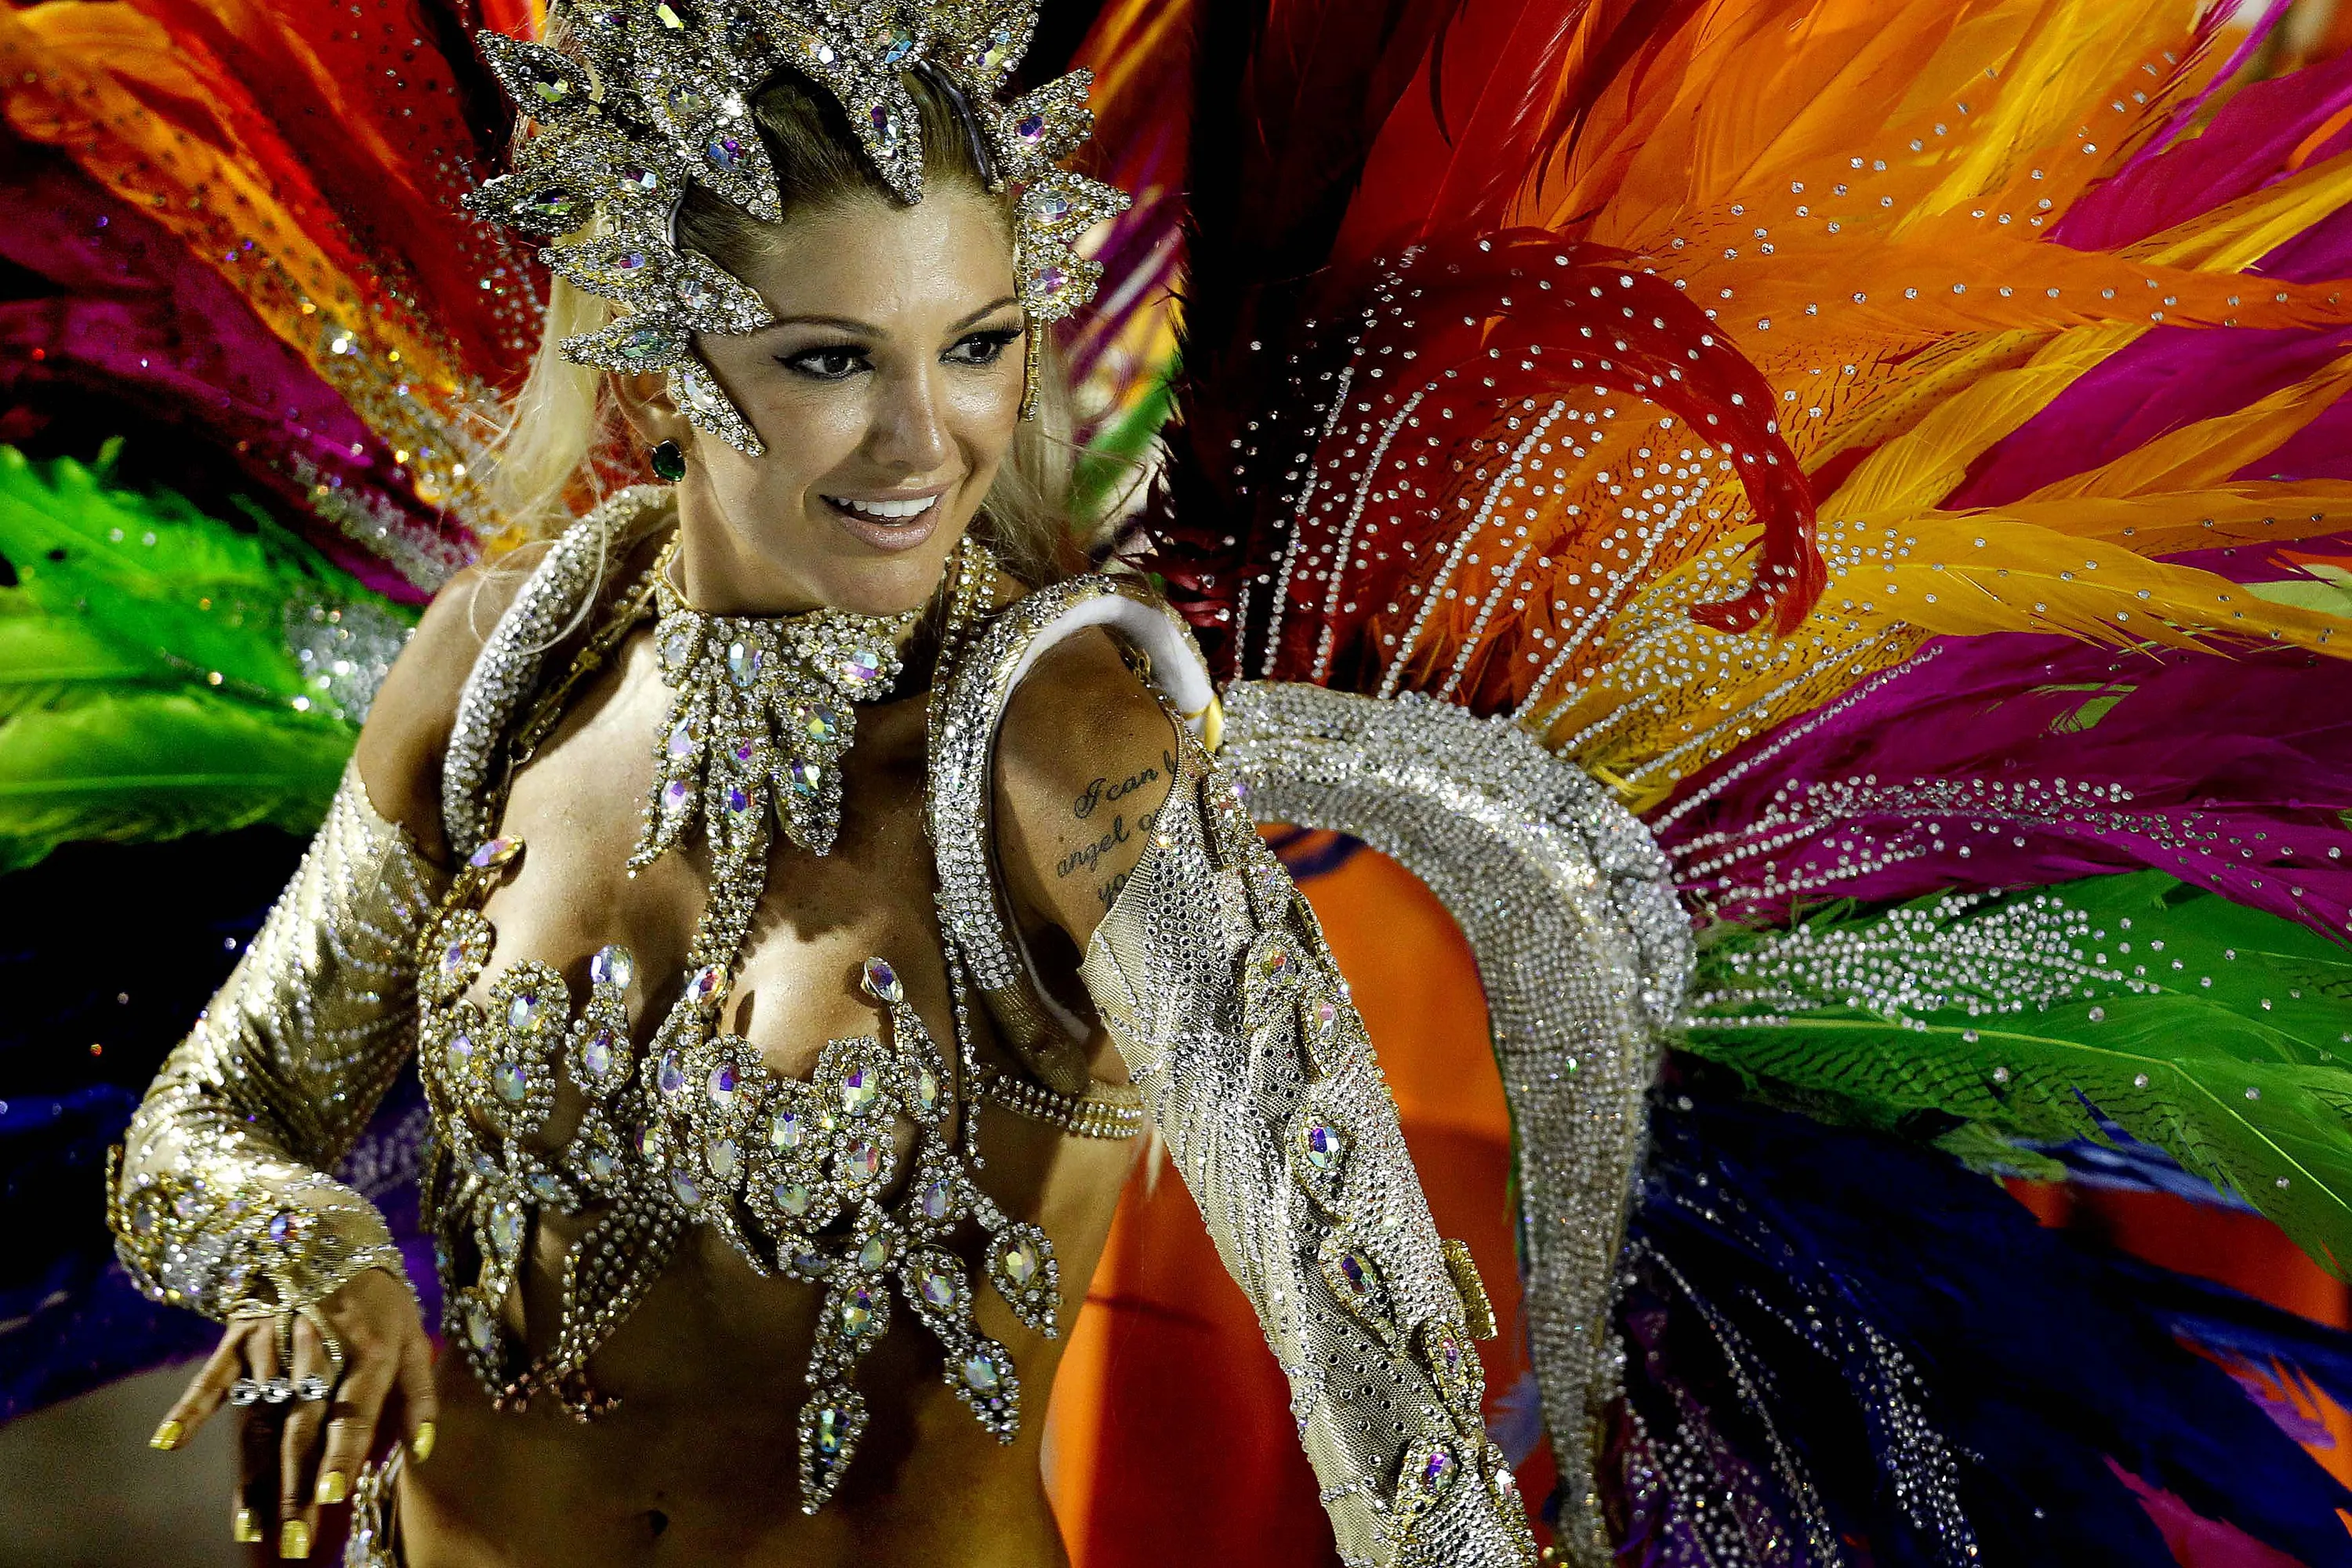 Звезды карнавала. Карнавал в Рио-де-Жанейро 2022. Вивиан Араужо карнавал Рио. Вивиана Кастро карнавал Бразилия. Карнавал в Рио-де-Жанейро (бразильский карнавал).